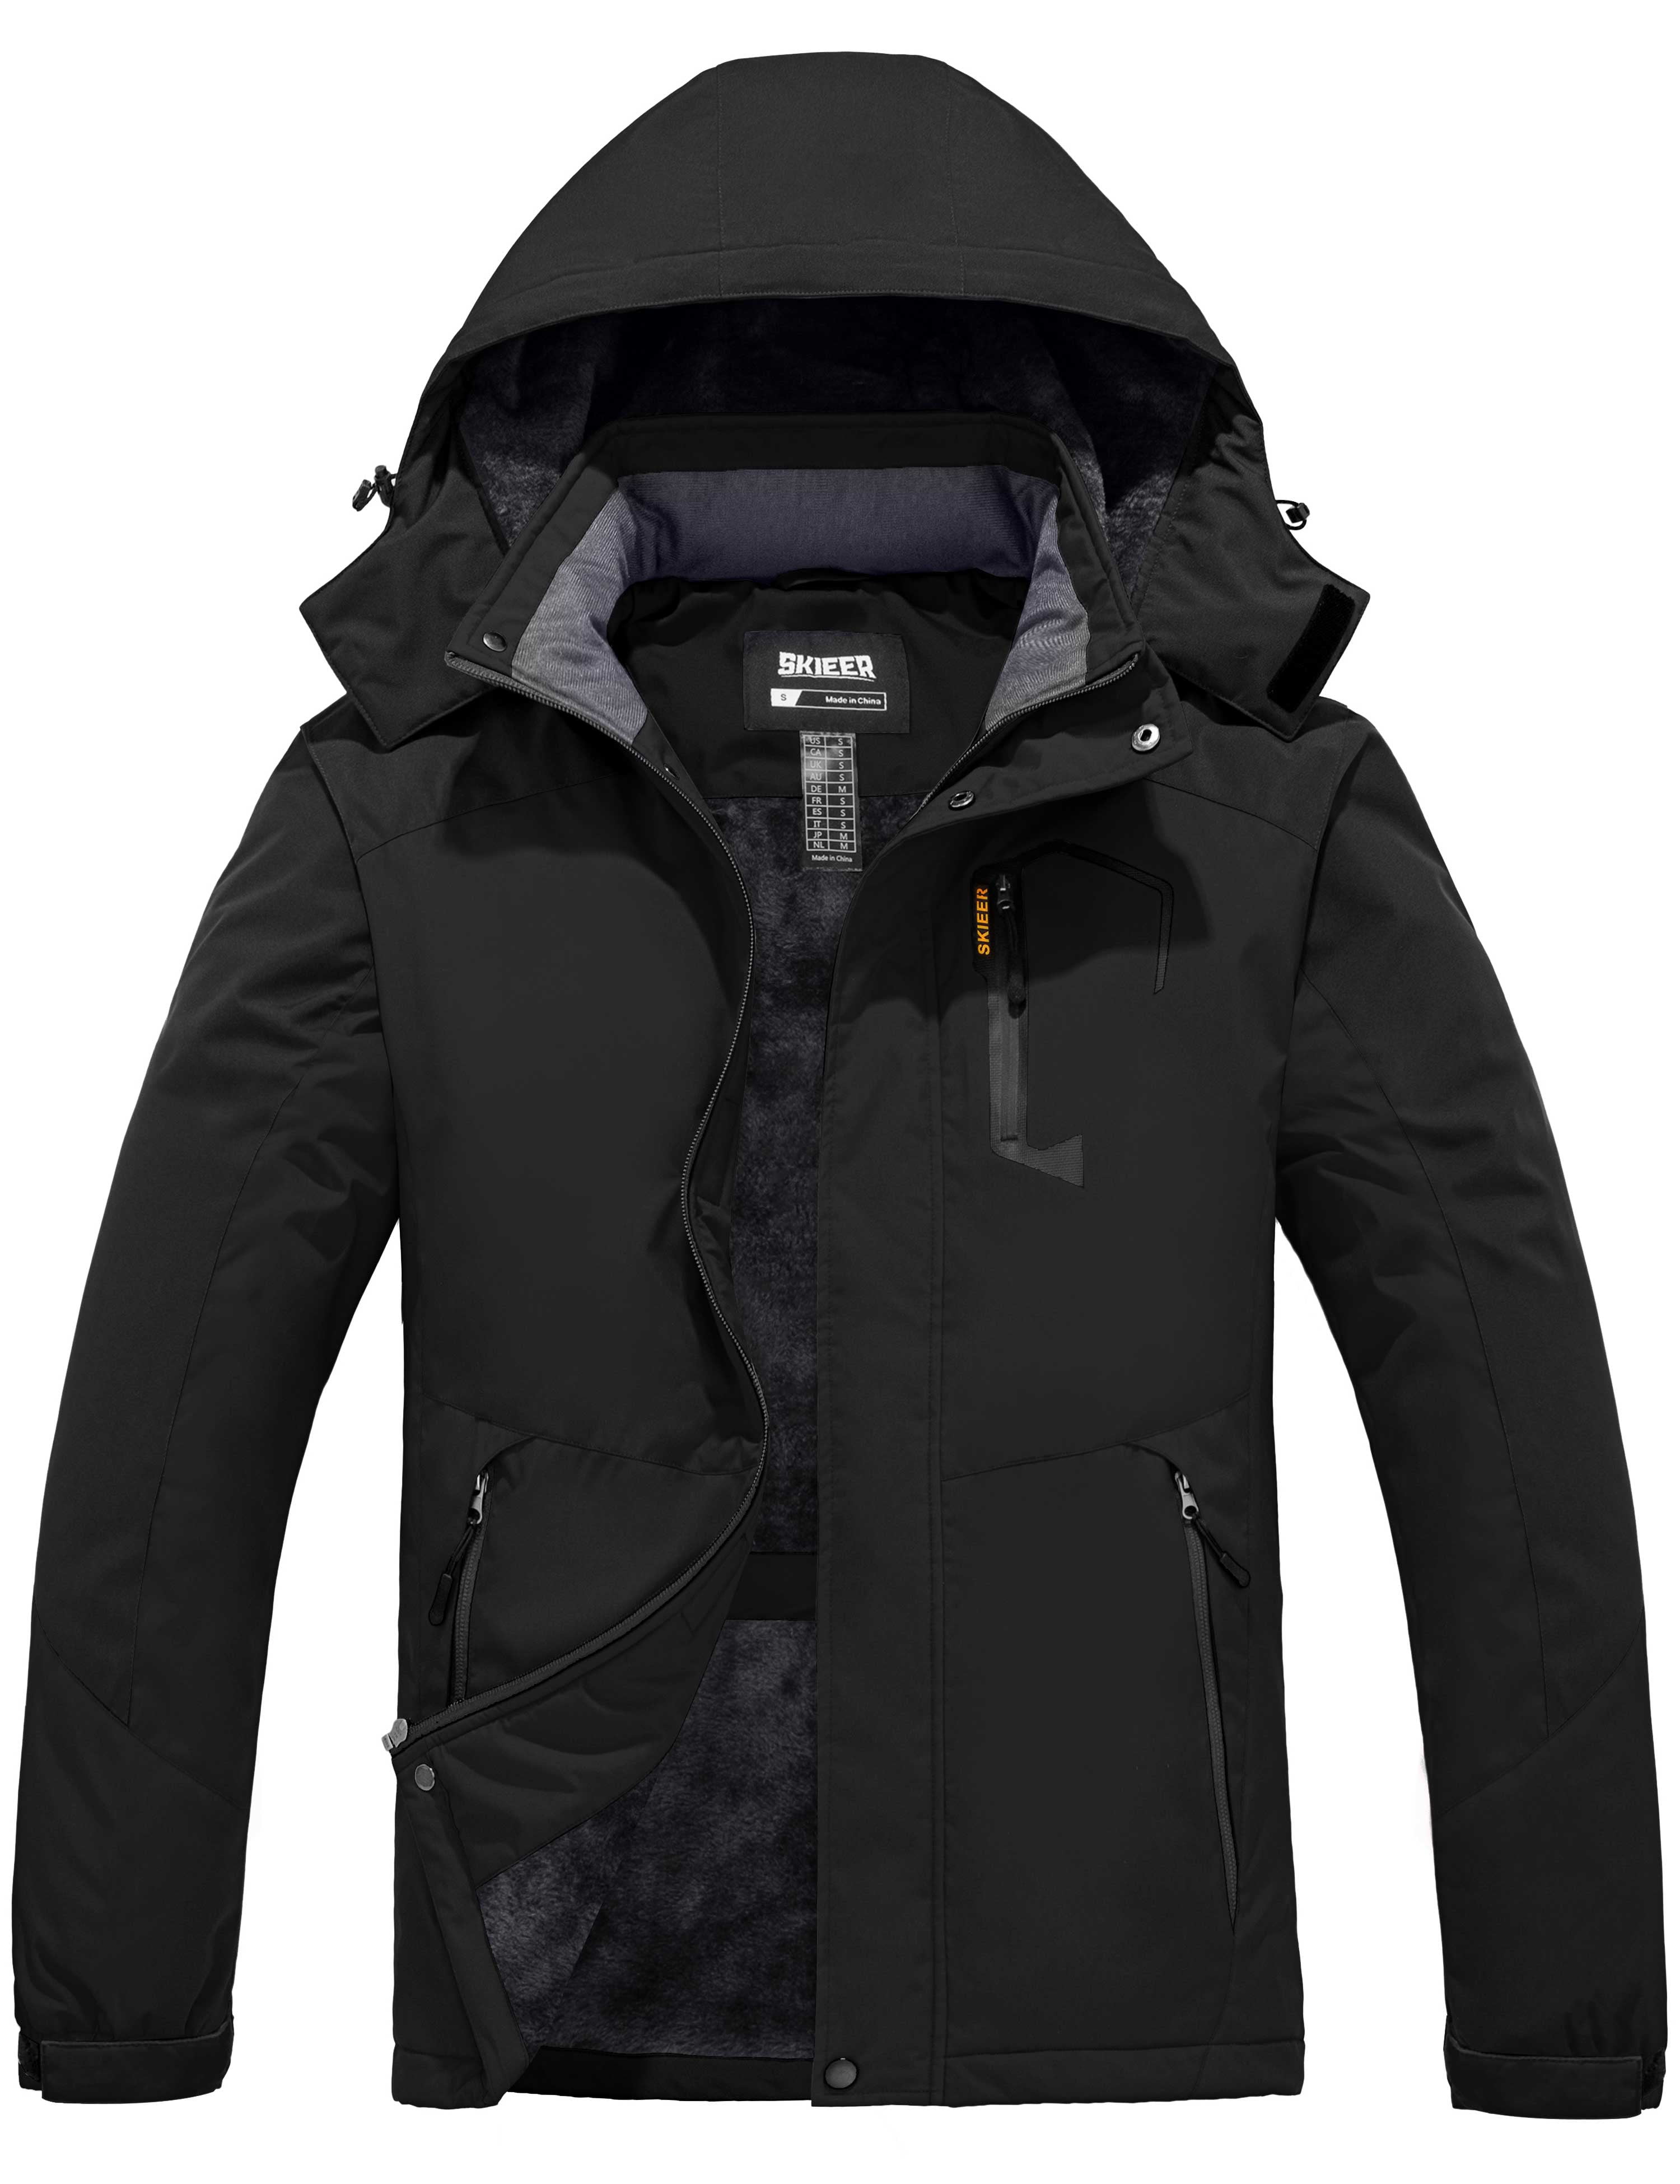 Skieer Men's Plus Size Ski Coat Waterproof Snow Jacket Winter Outerwear ...